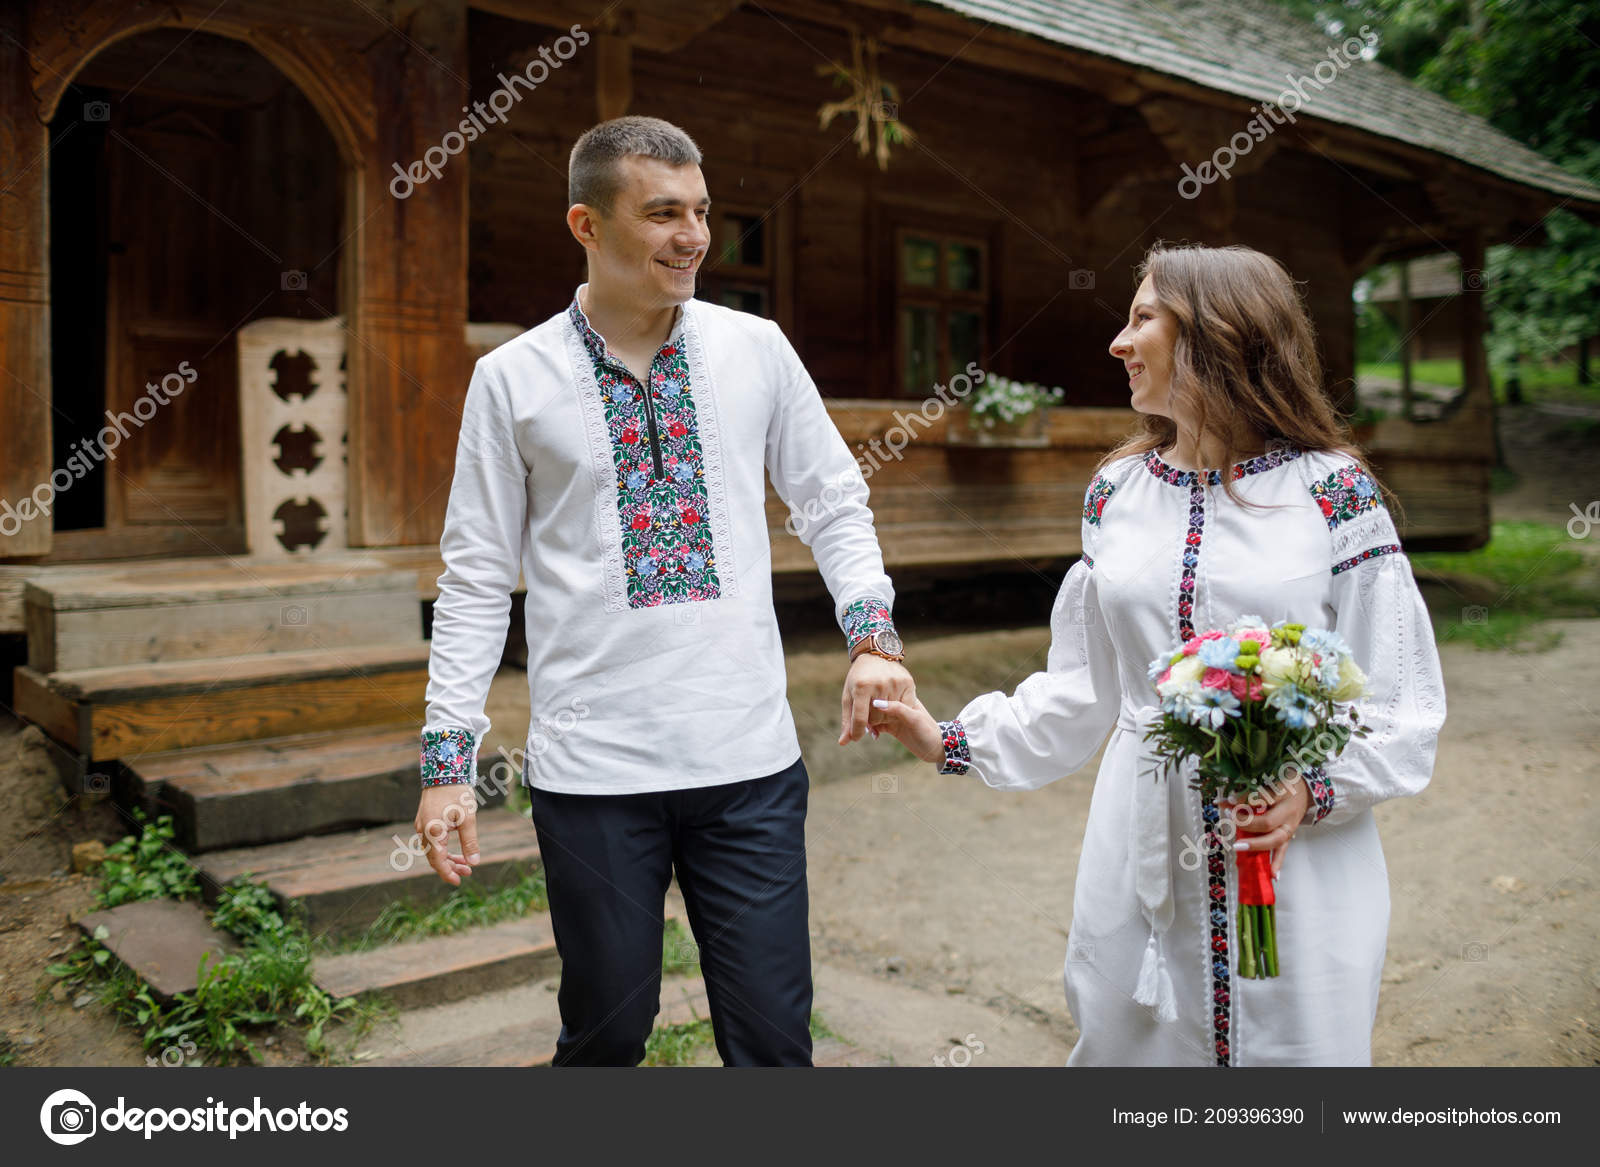 https://st4.depositphotos.com/11589532/20939/i/1600/depositphotos_209396390-stock-photo-lovely-couple-ukrainian-national-costumes.jpg